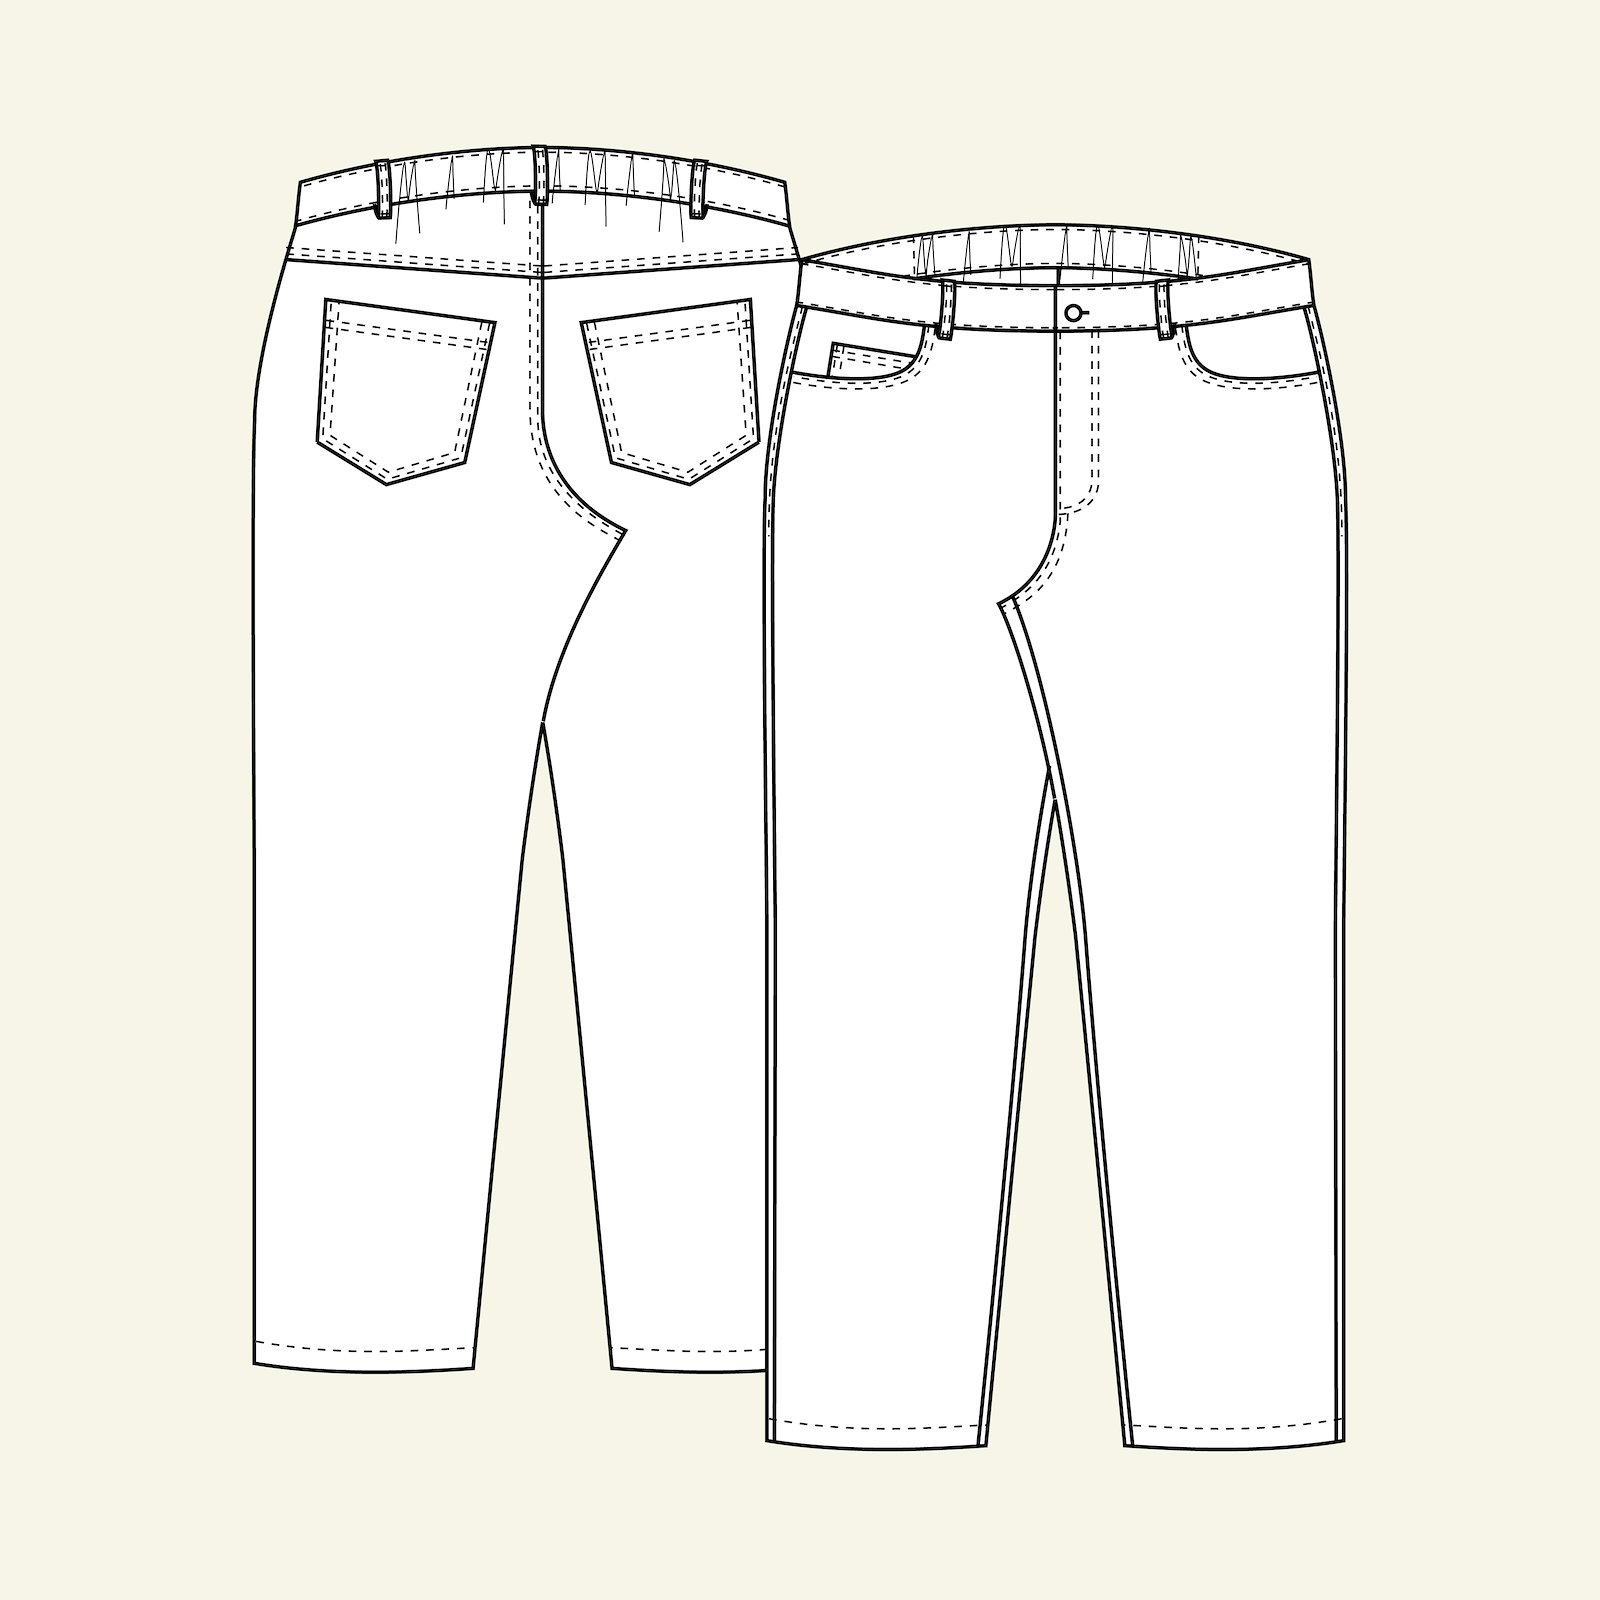 Klassisk jeans med resårlinning bak, 60 p70007000_p70007001_p70007002_p70007003_p70007004_pack_b